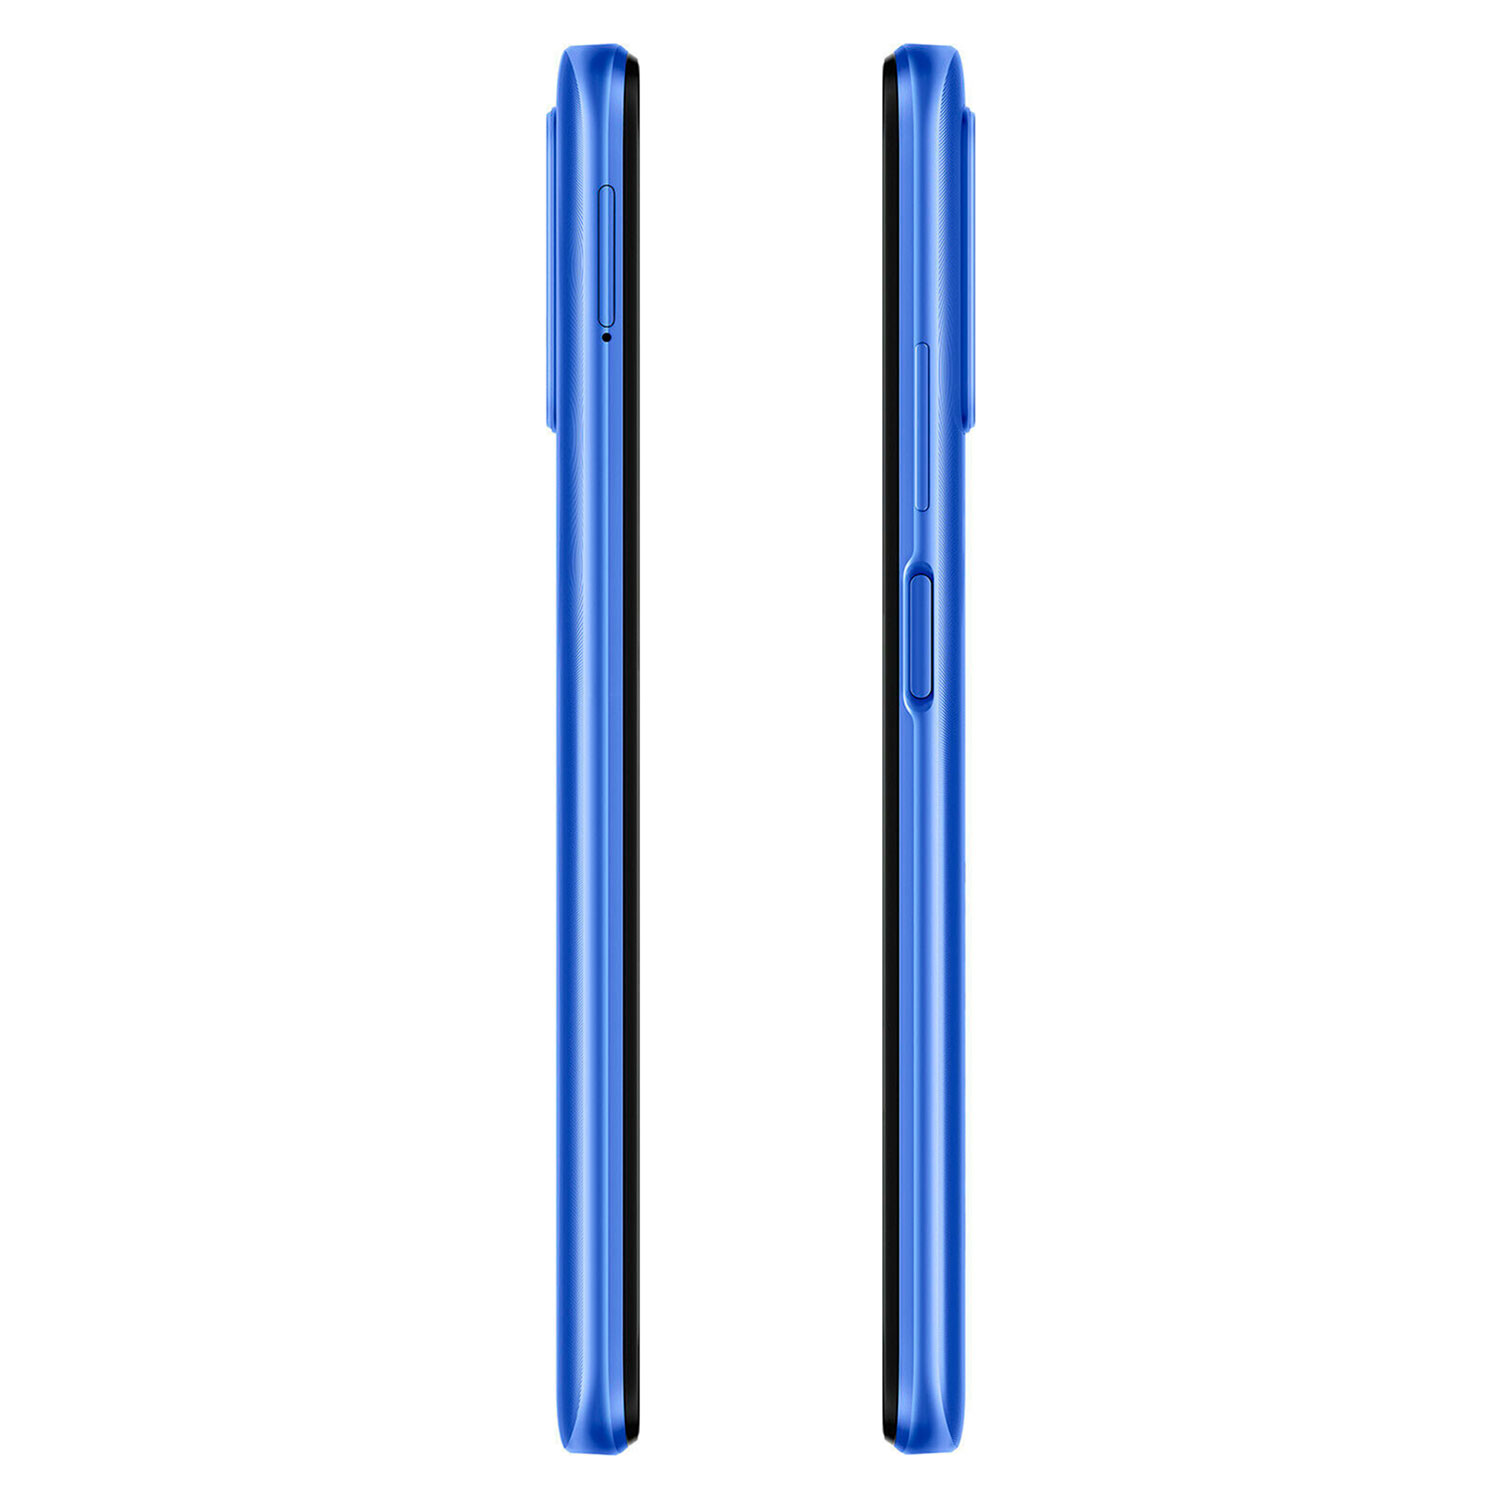 Smartphone Xiaomi Redmi 9T Global 128GB 4GB RAM Dual SIM Tela 6.53" - Azul (Lacre Pequeno)